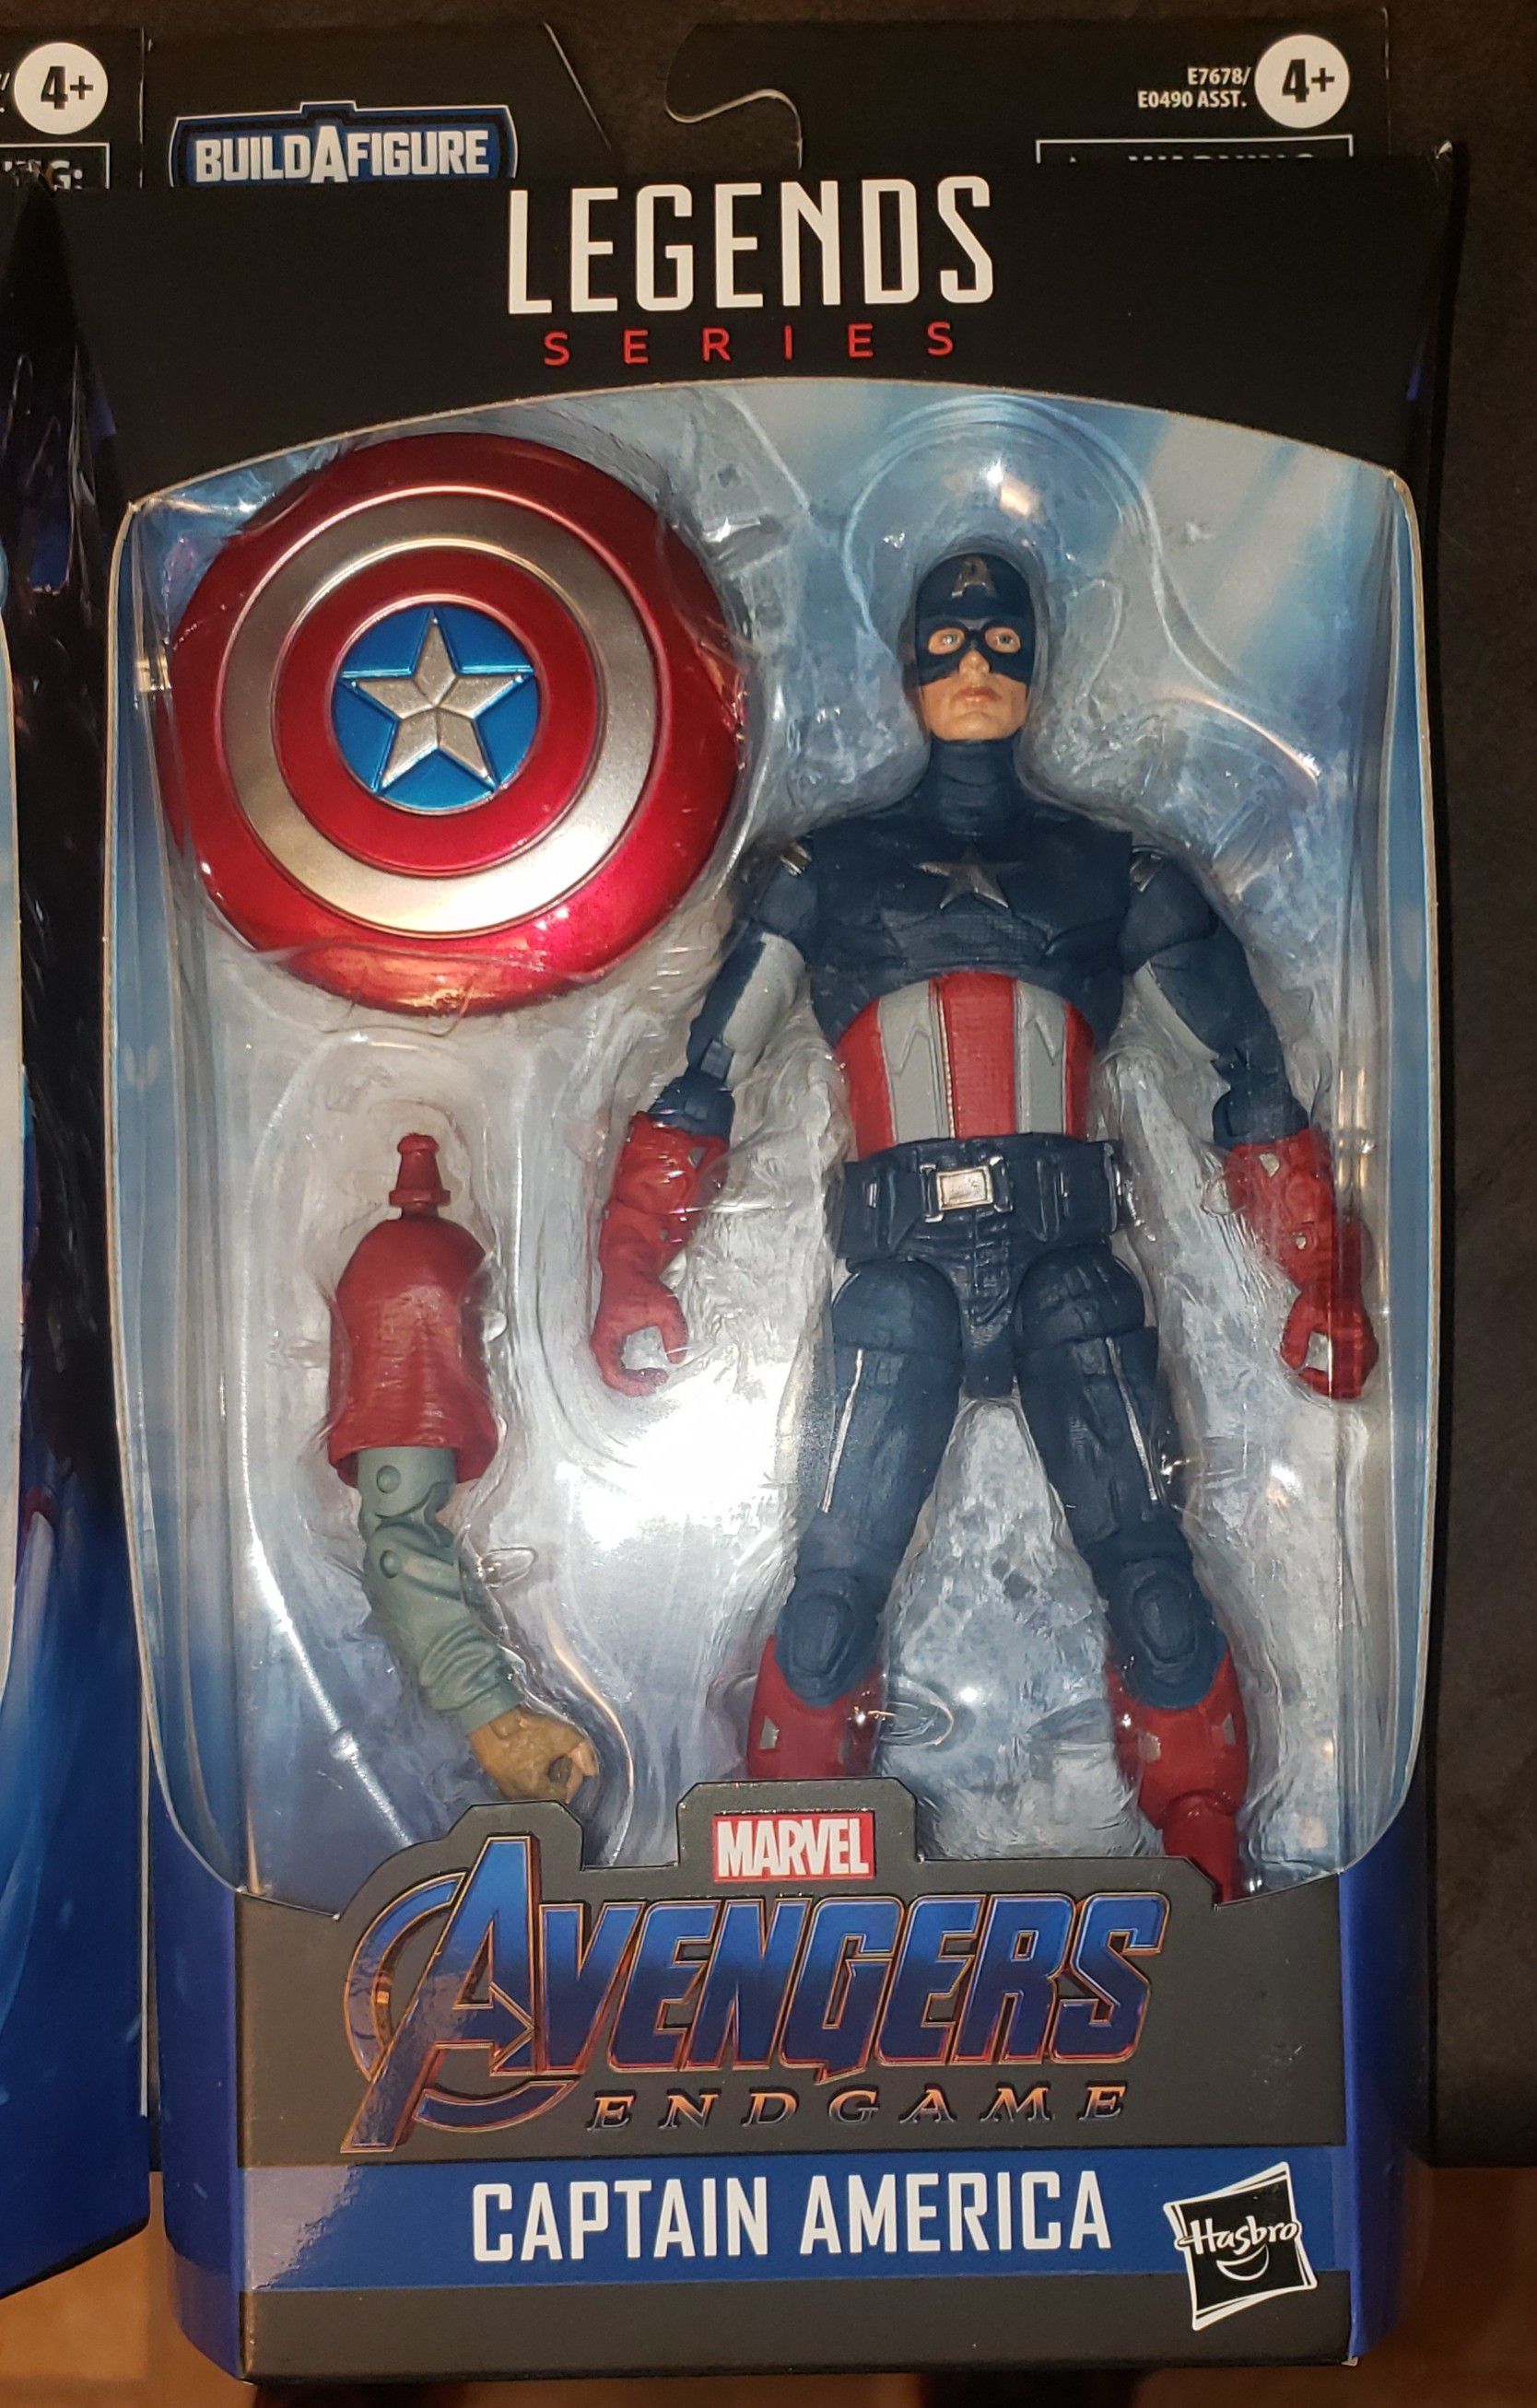 Marvel legends avengers endgame captain America with fat thor baf piece